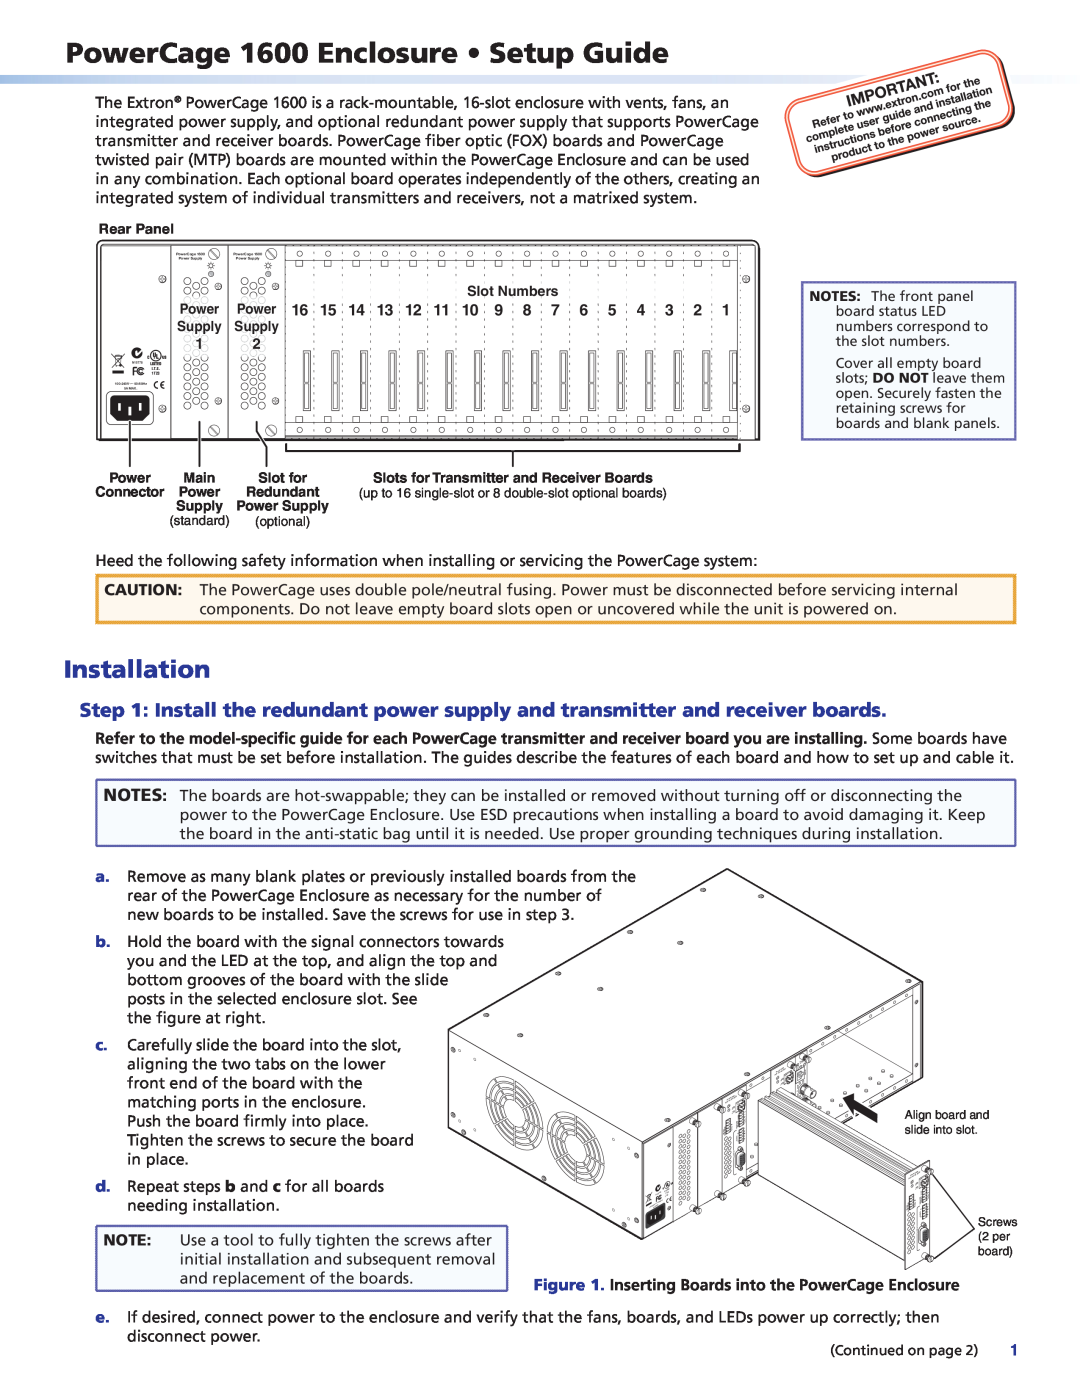 Extron electronic setup guide PowerCage 1600 Enclosure Setup Guide, Power 16 15 14 13 12 11 10 9 8 7 6 5 4 3 2 